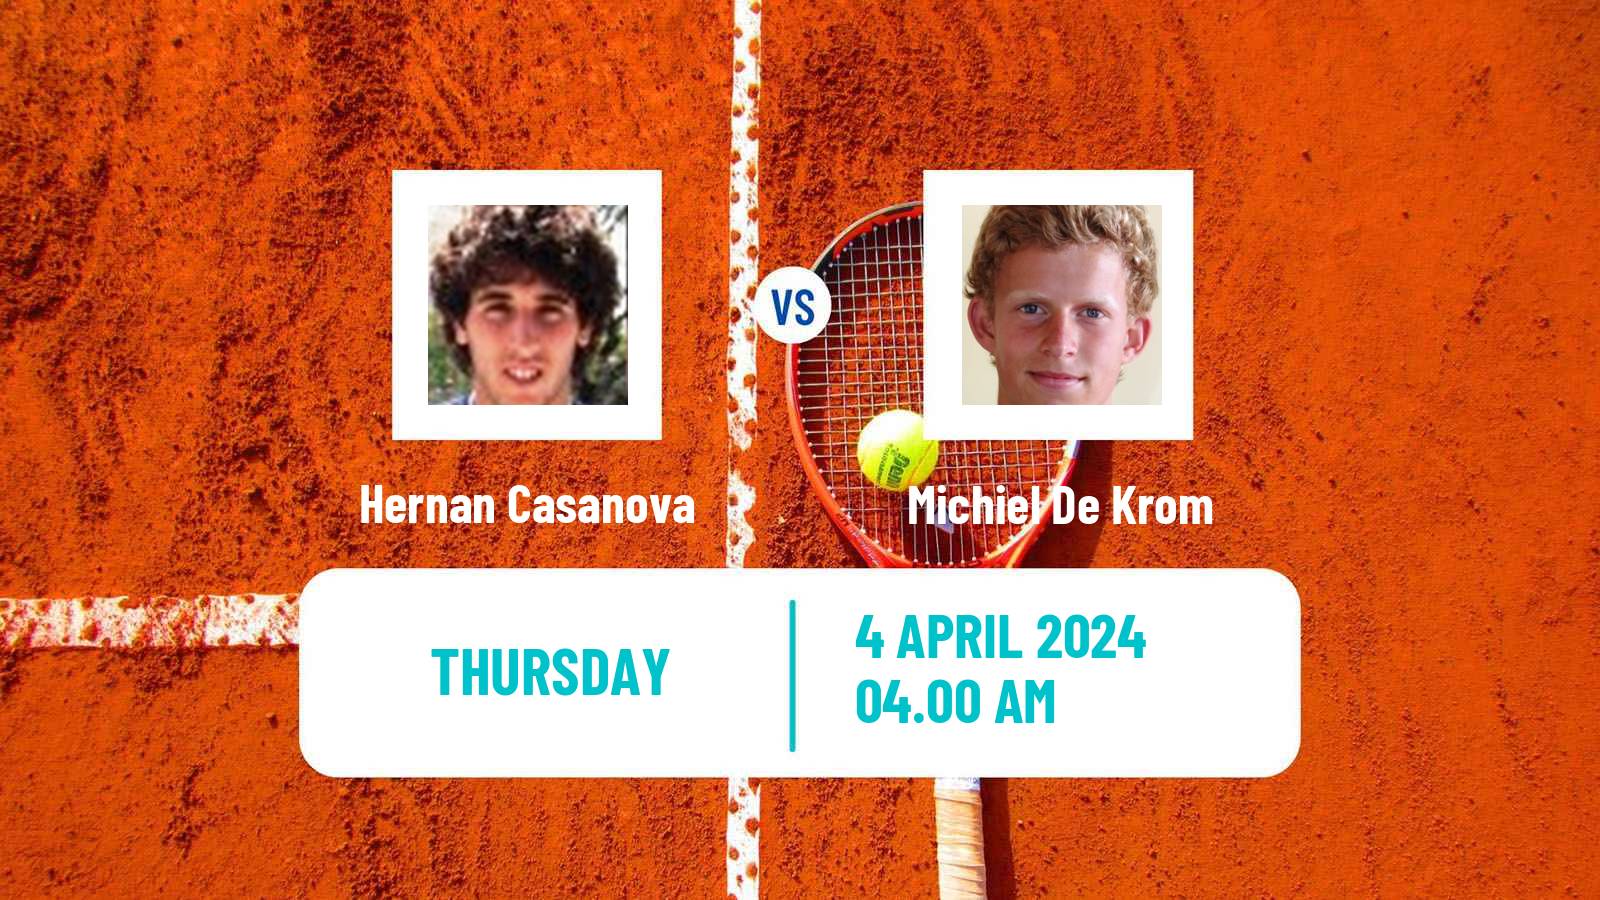 Tennis ITF M25 Reus Men Hernan Casanova - Michiel De Krom